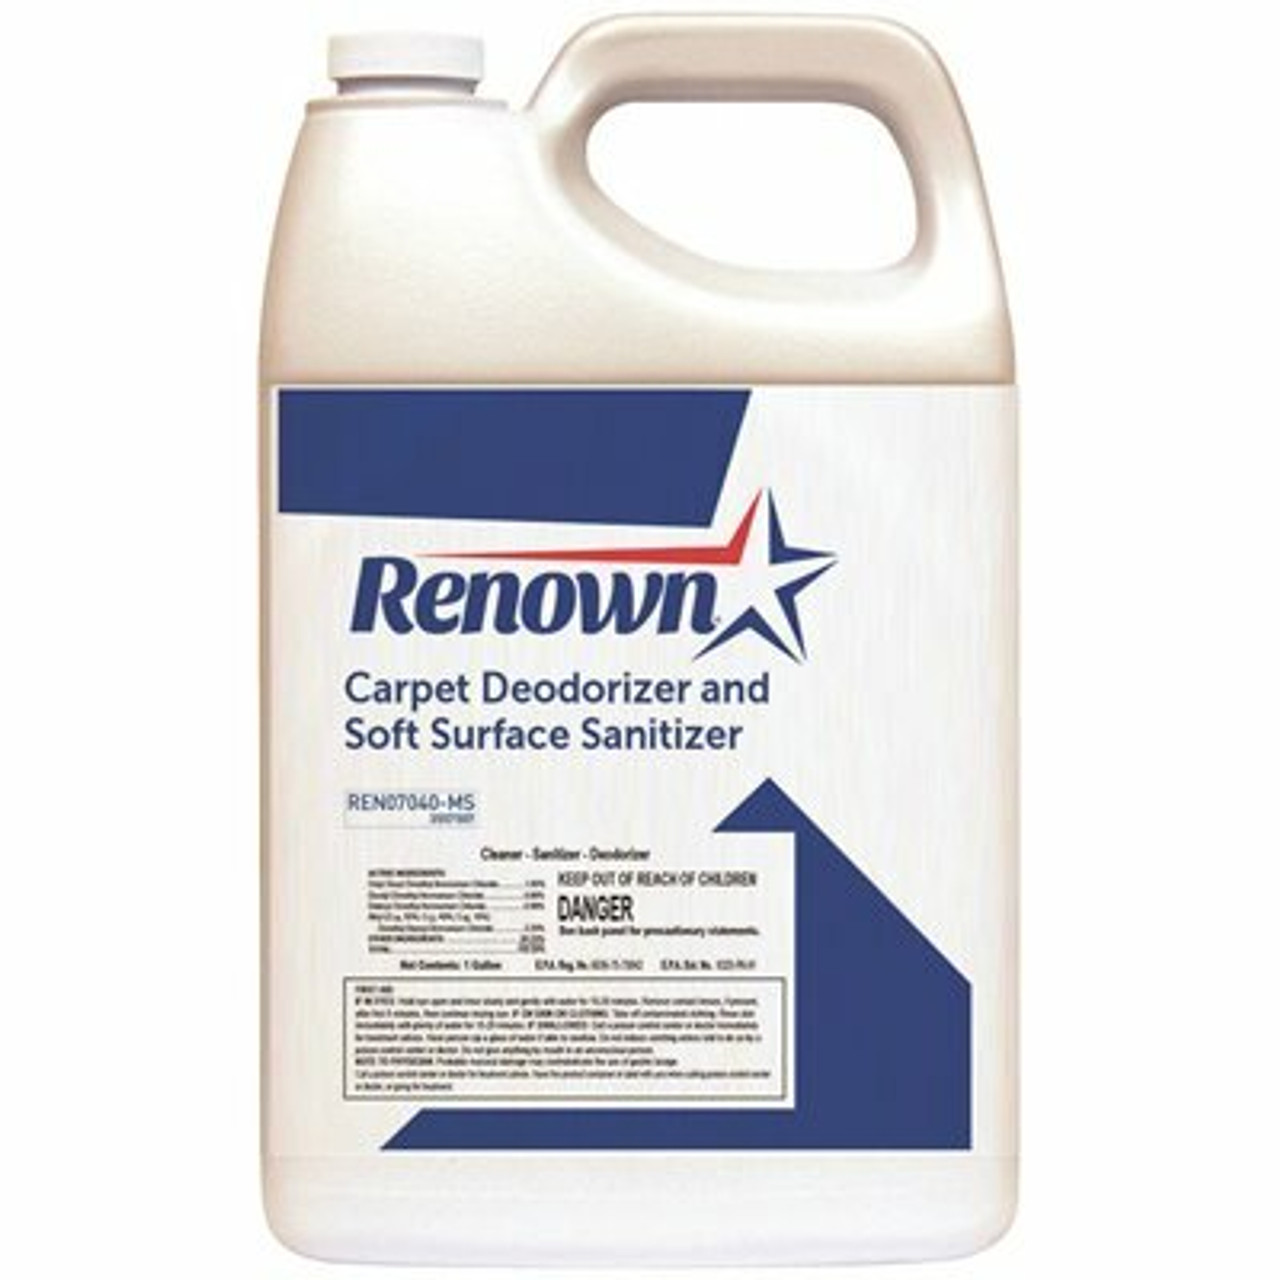 Renown 1 Gal. Carpet Deodorizer And Soft Surface Sanitizer